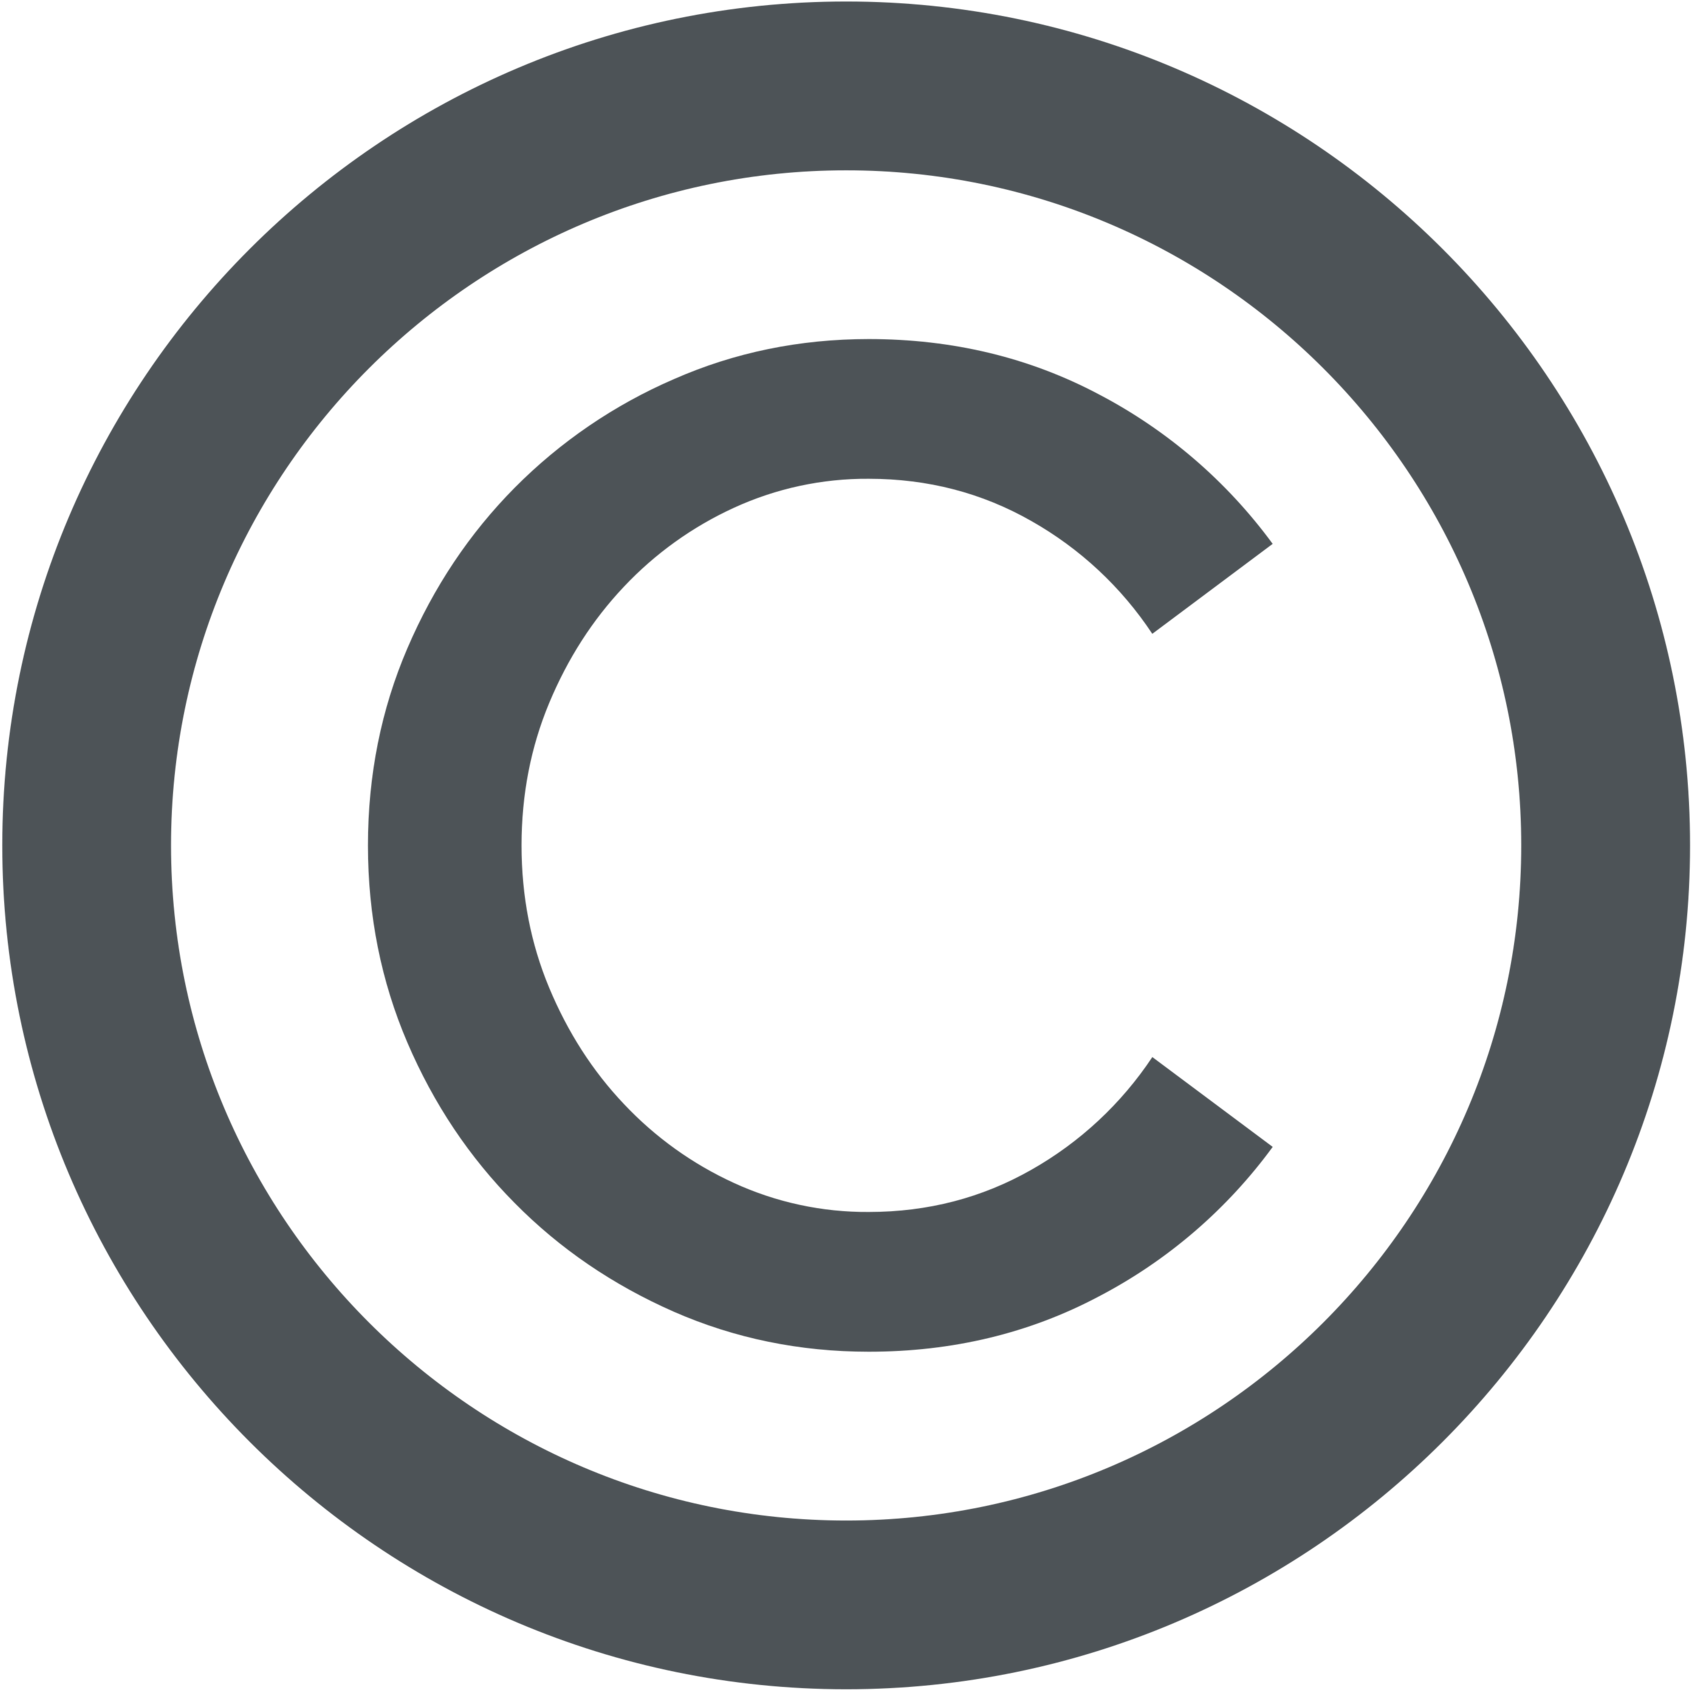 Download Copyright Symbol Transparent Image Copyright Logo Transparent Background Png Image With No Background Pngkey Com